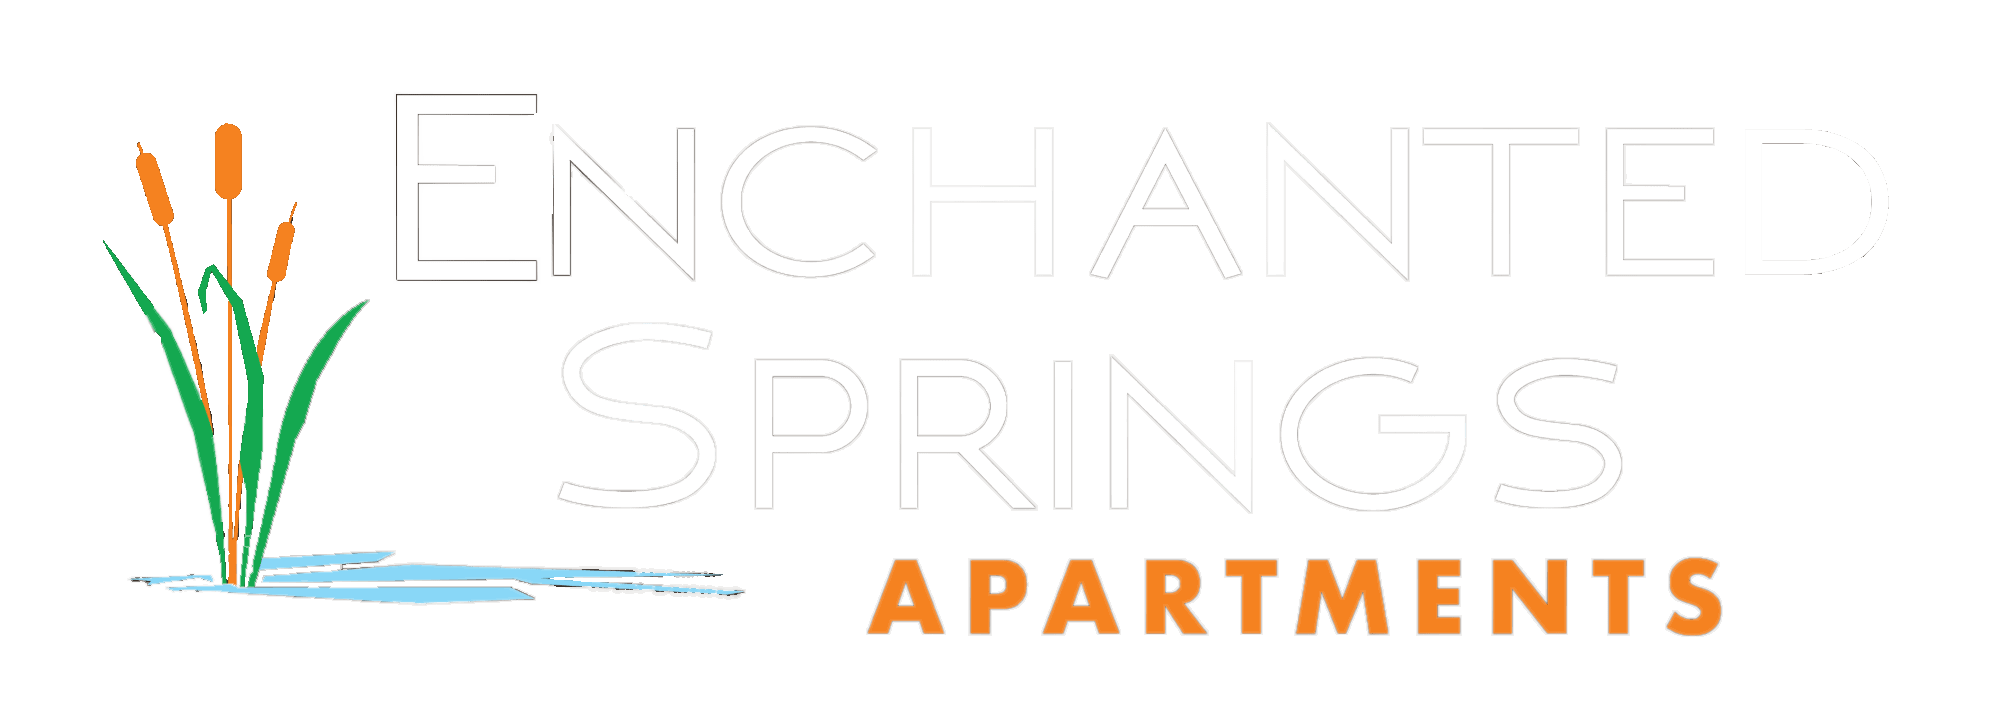 Enchanted Springs Apartments